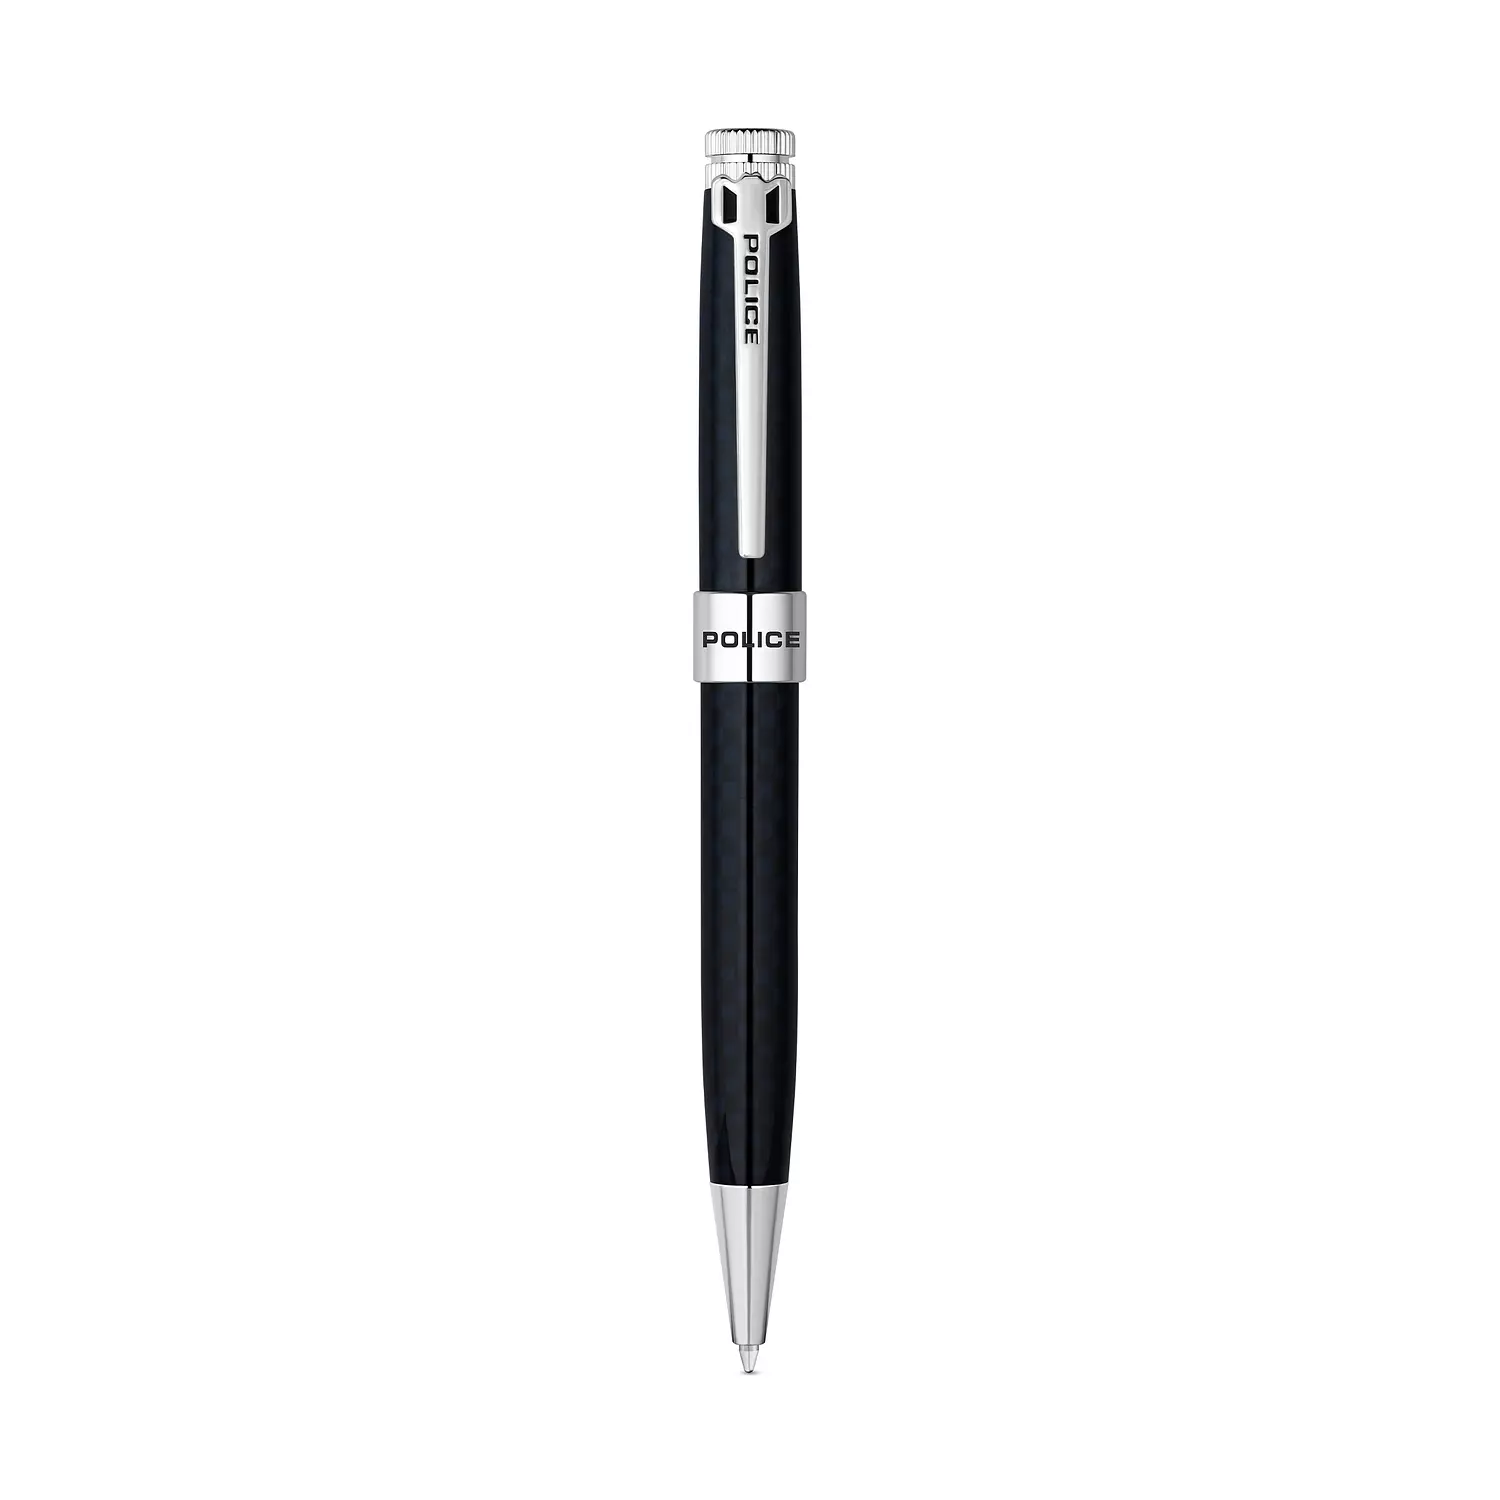 POLICE - Constantia Pen For Men Black & Gunmetal Color, Ball Point - PERGR0002801 hover image